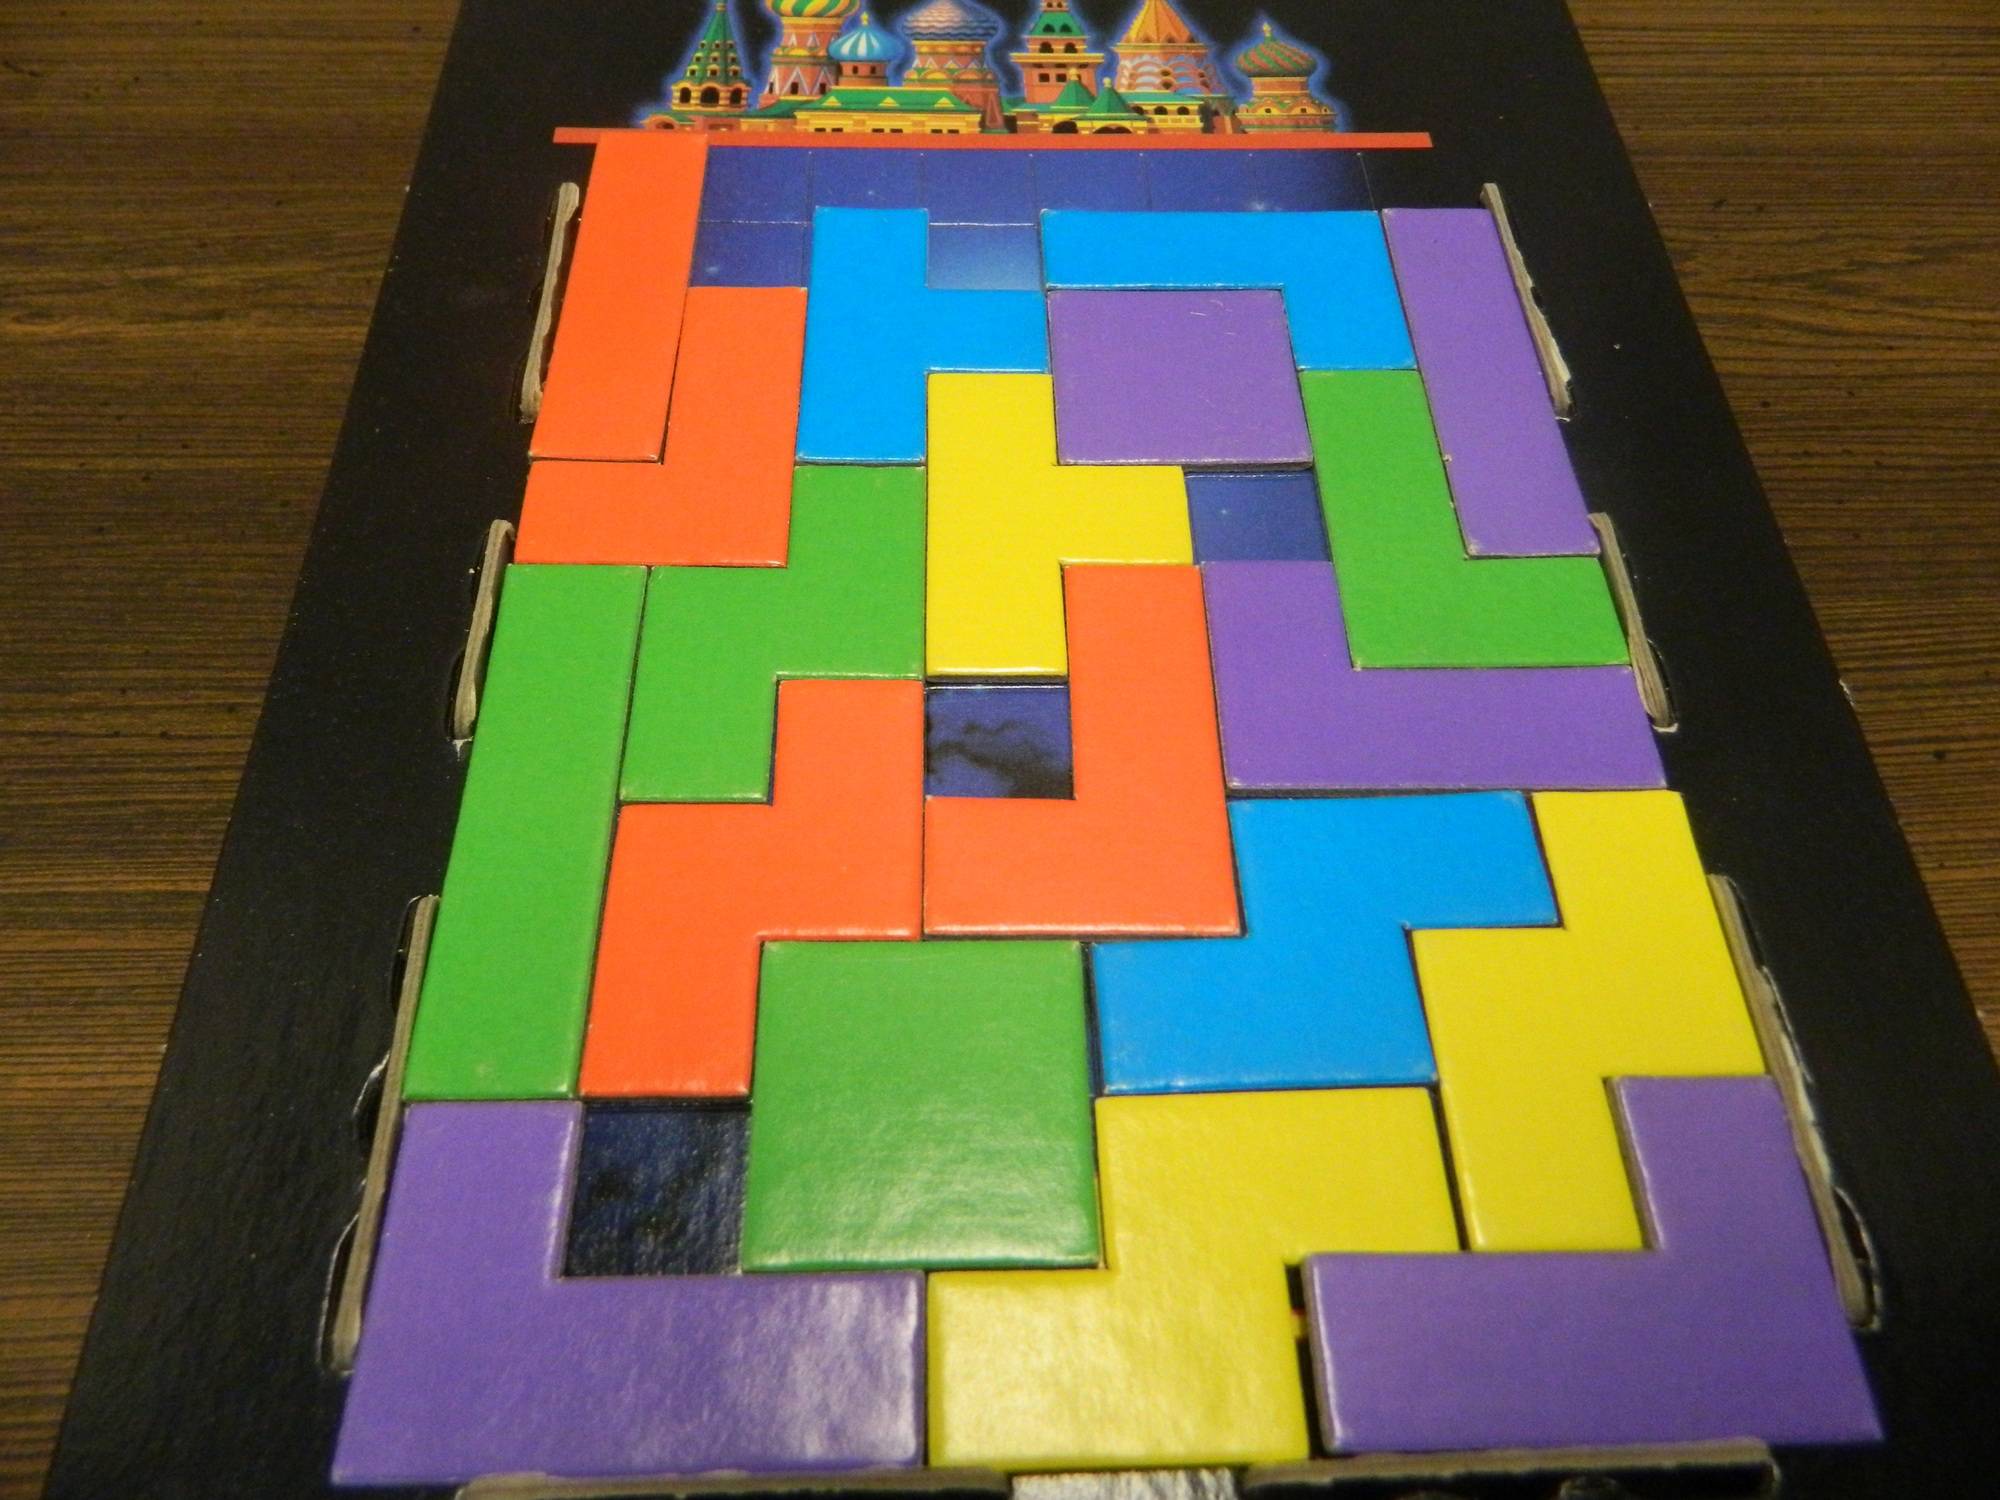 Review: Tetris board game is Tetris - Polygon